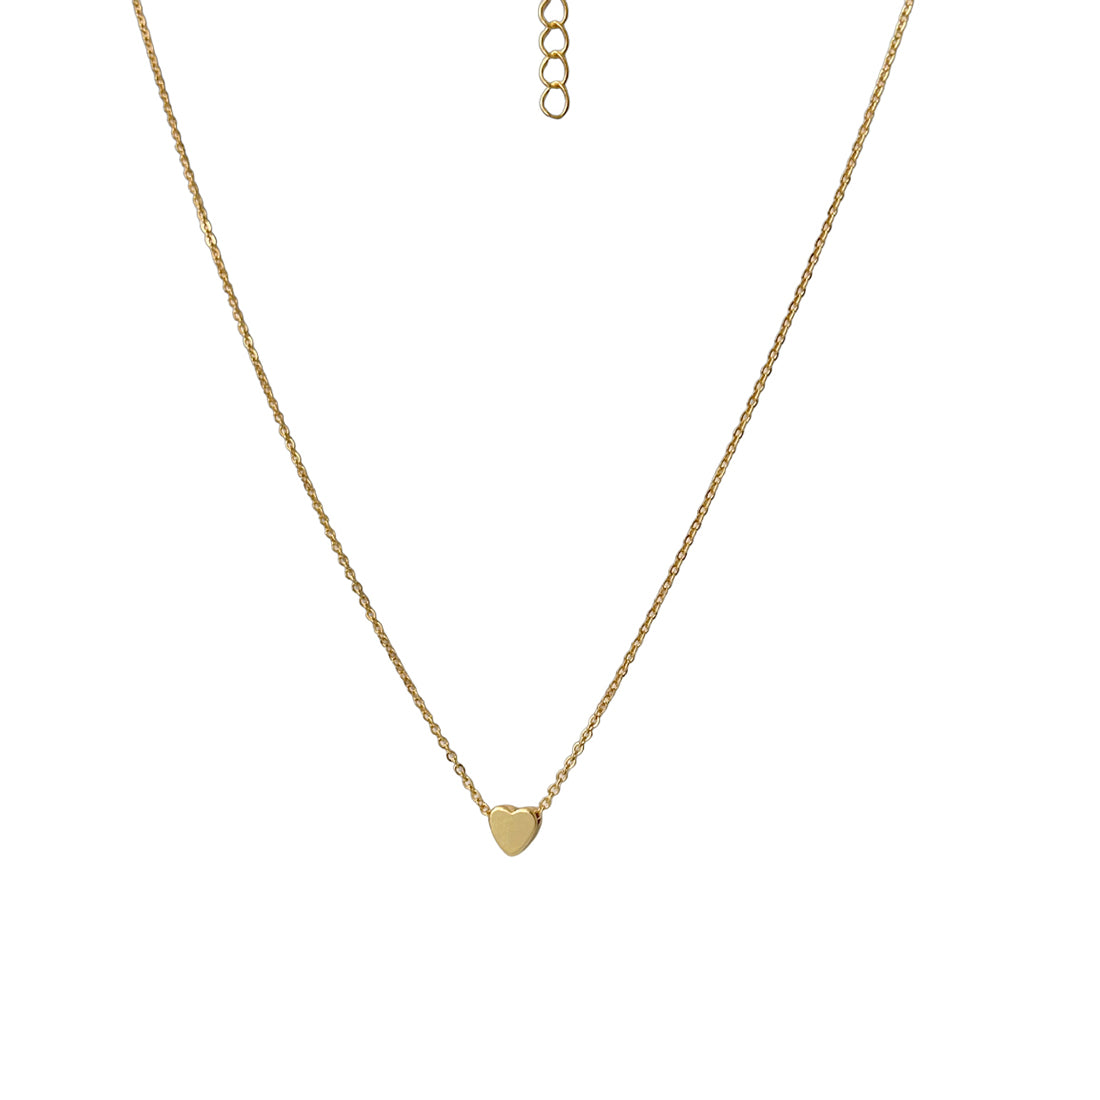 Set of 2 Heart Pendant Gold-Toned Necklace & Bracelet